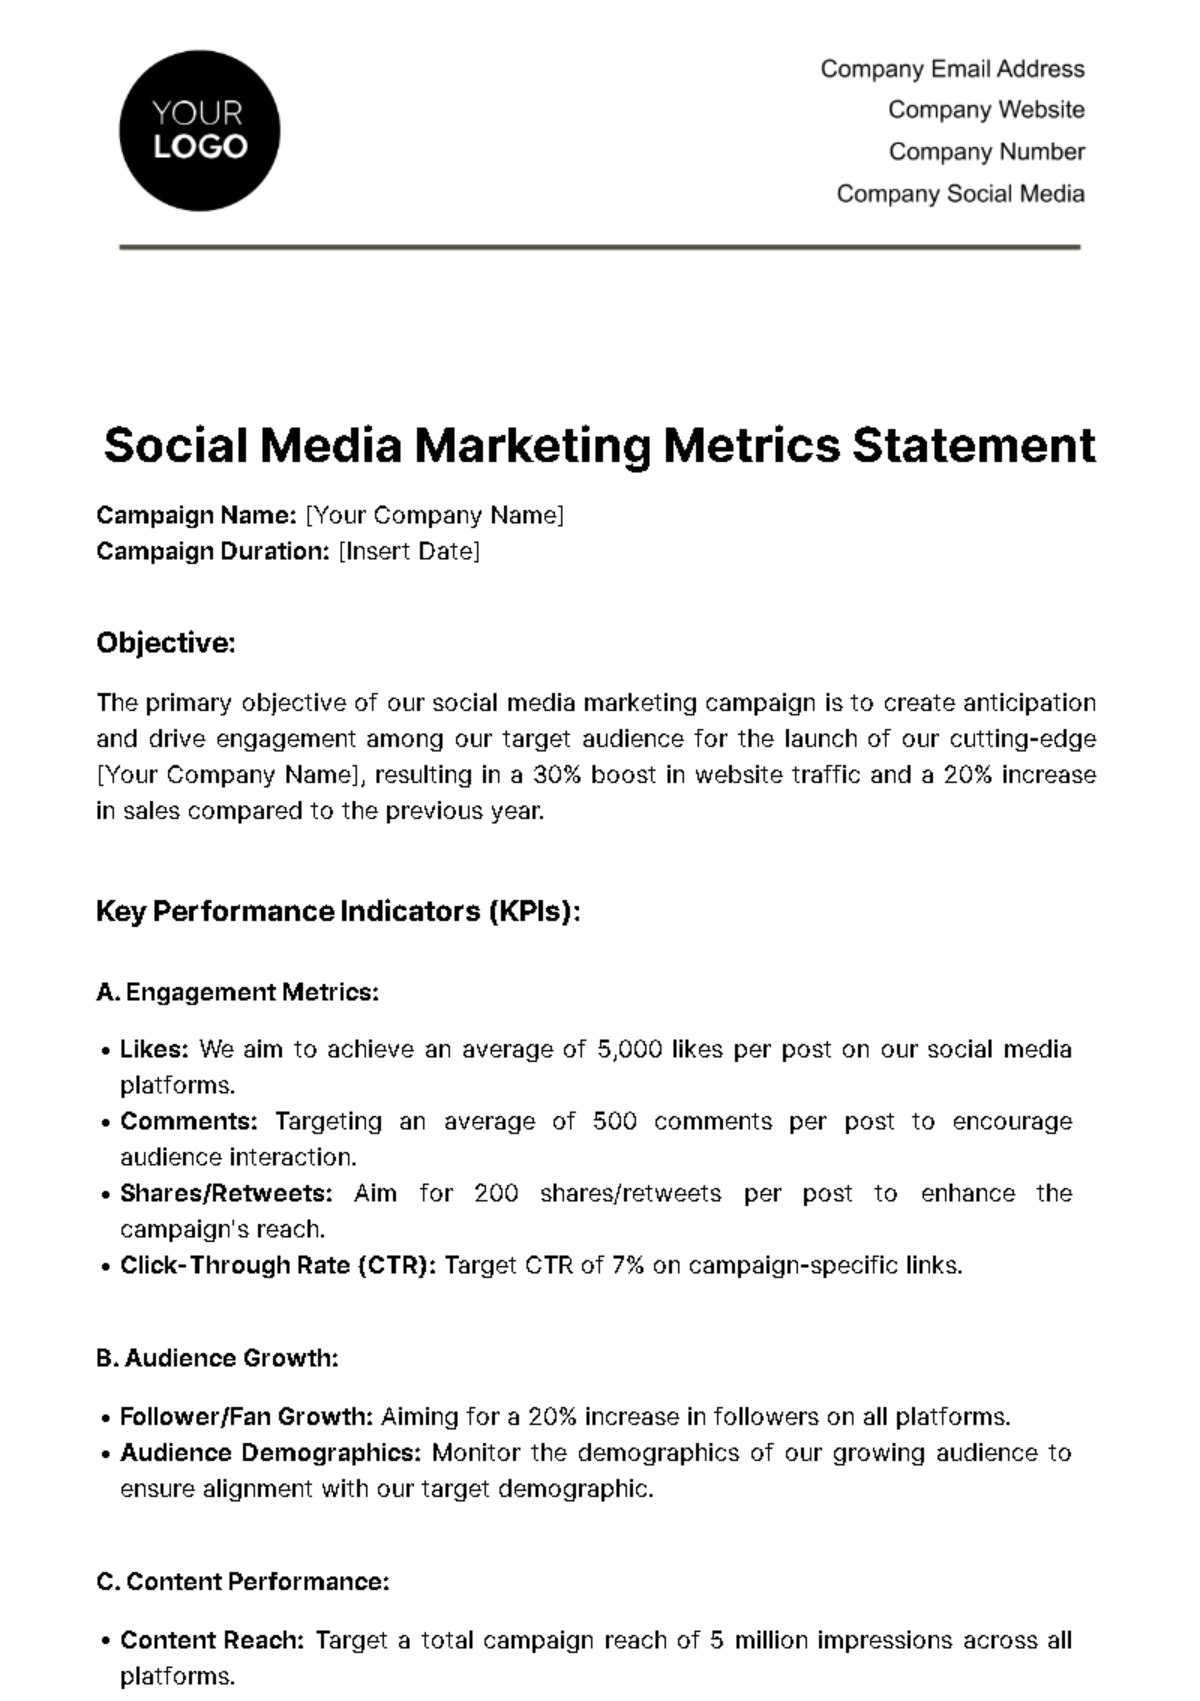 Free Social Media Marketing Metrics Statement Template